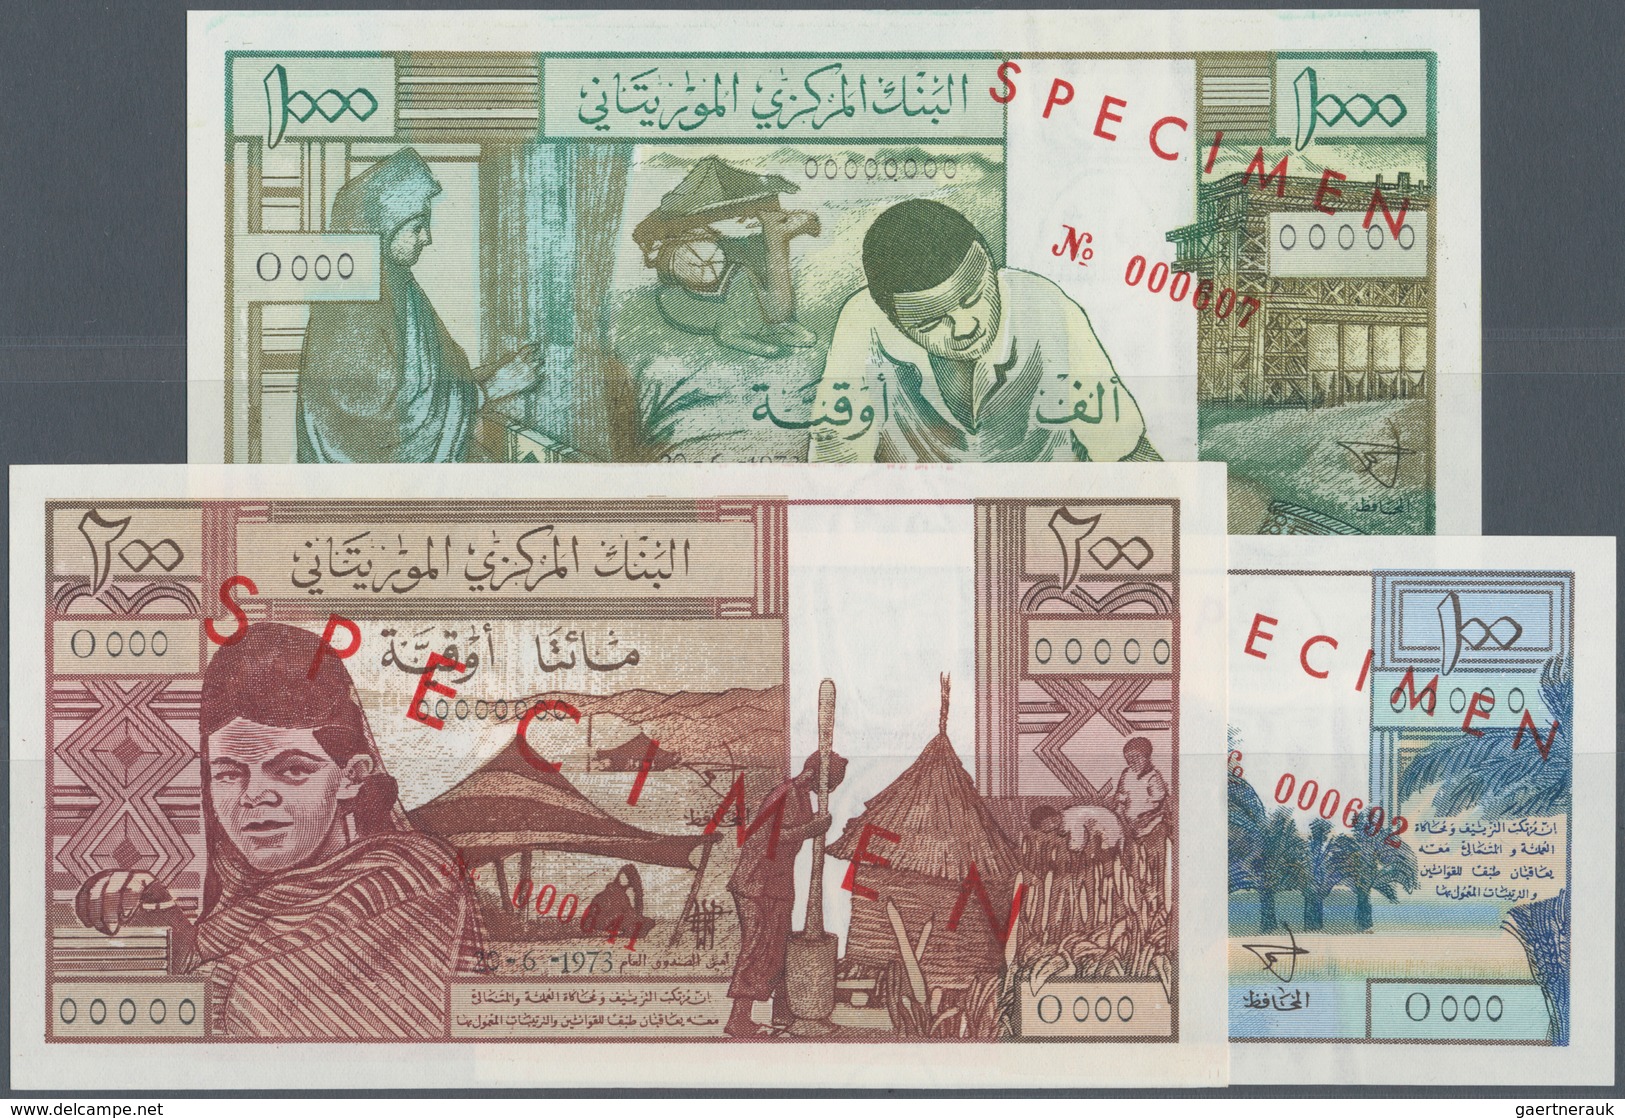 Mauritania / Mauretanien: Set Of 3 SPECIMEN Banknotes Containing 100, 200 & 1000 Ouguiya 1973 P. 1s, - Mauritania